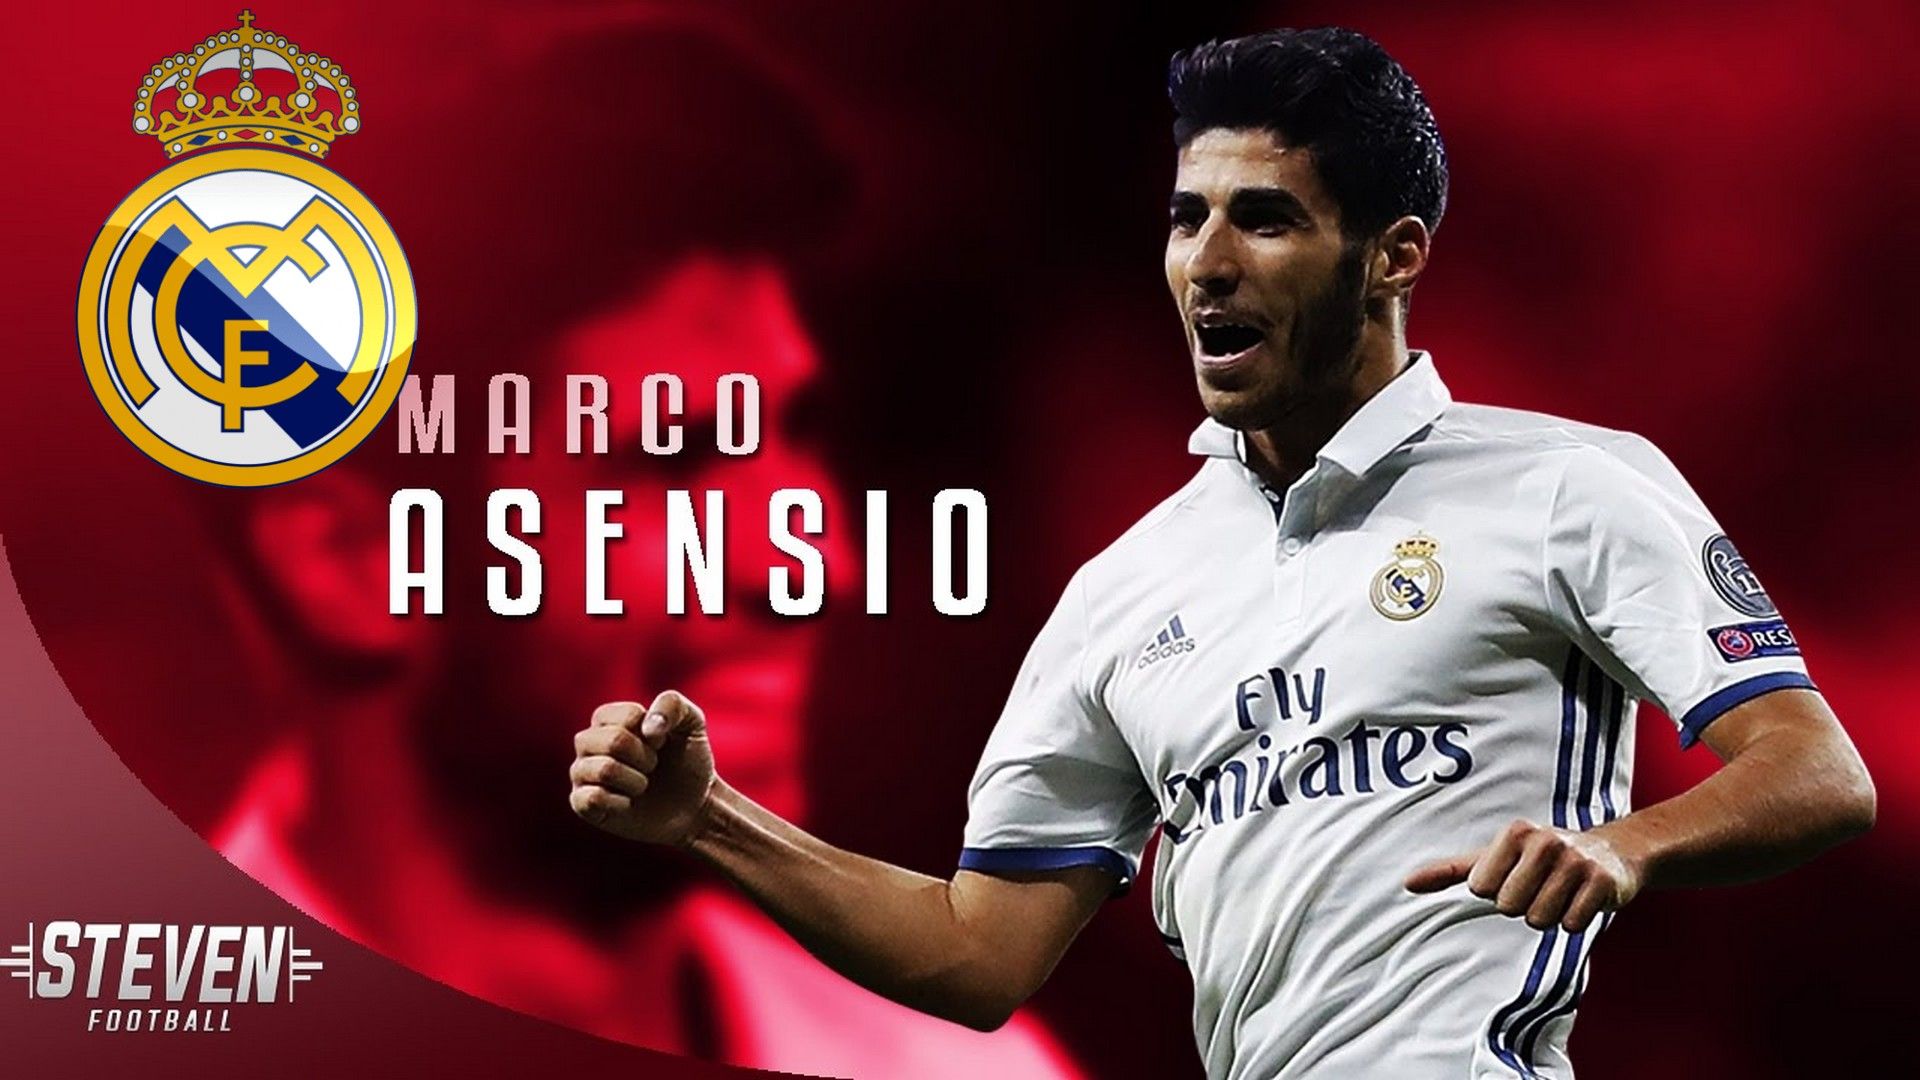 Marco Asensio Real Madrid HD Fondos de pantalla | Fondo de pantalla de fútbol 2019